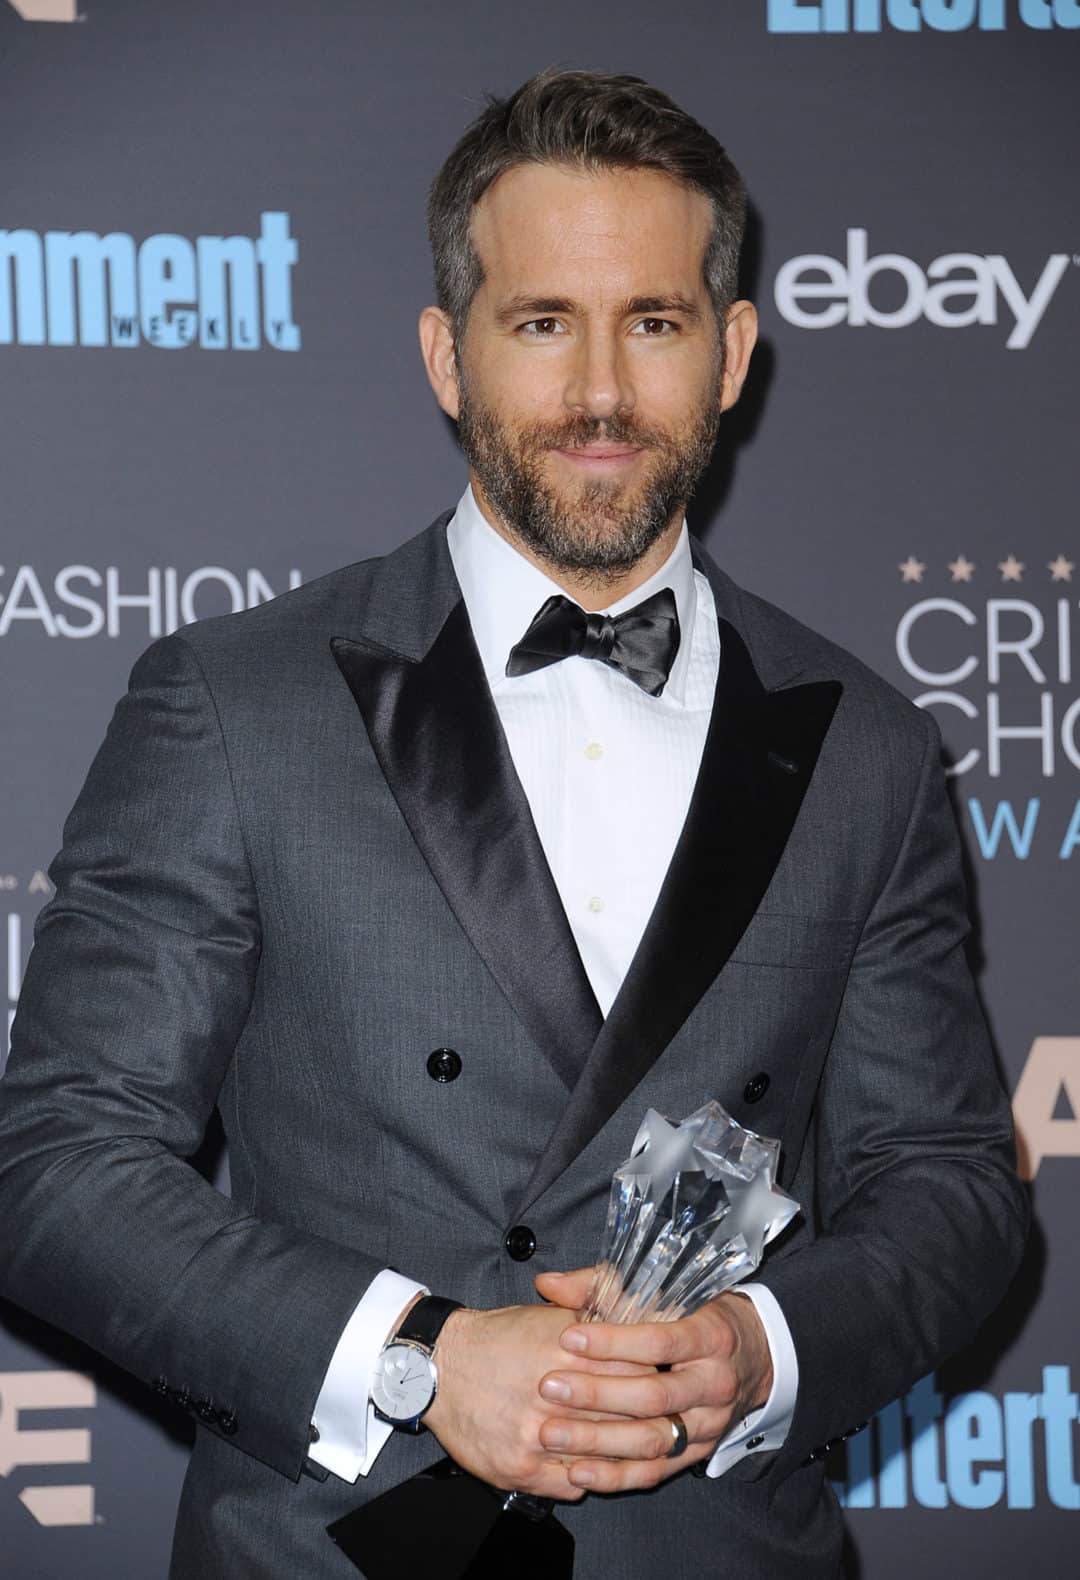 Ryan Reynolds becomes Piaget brand ambassador